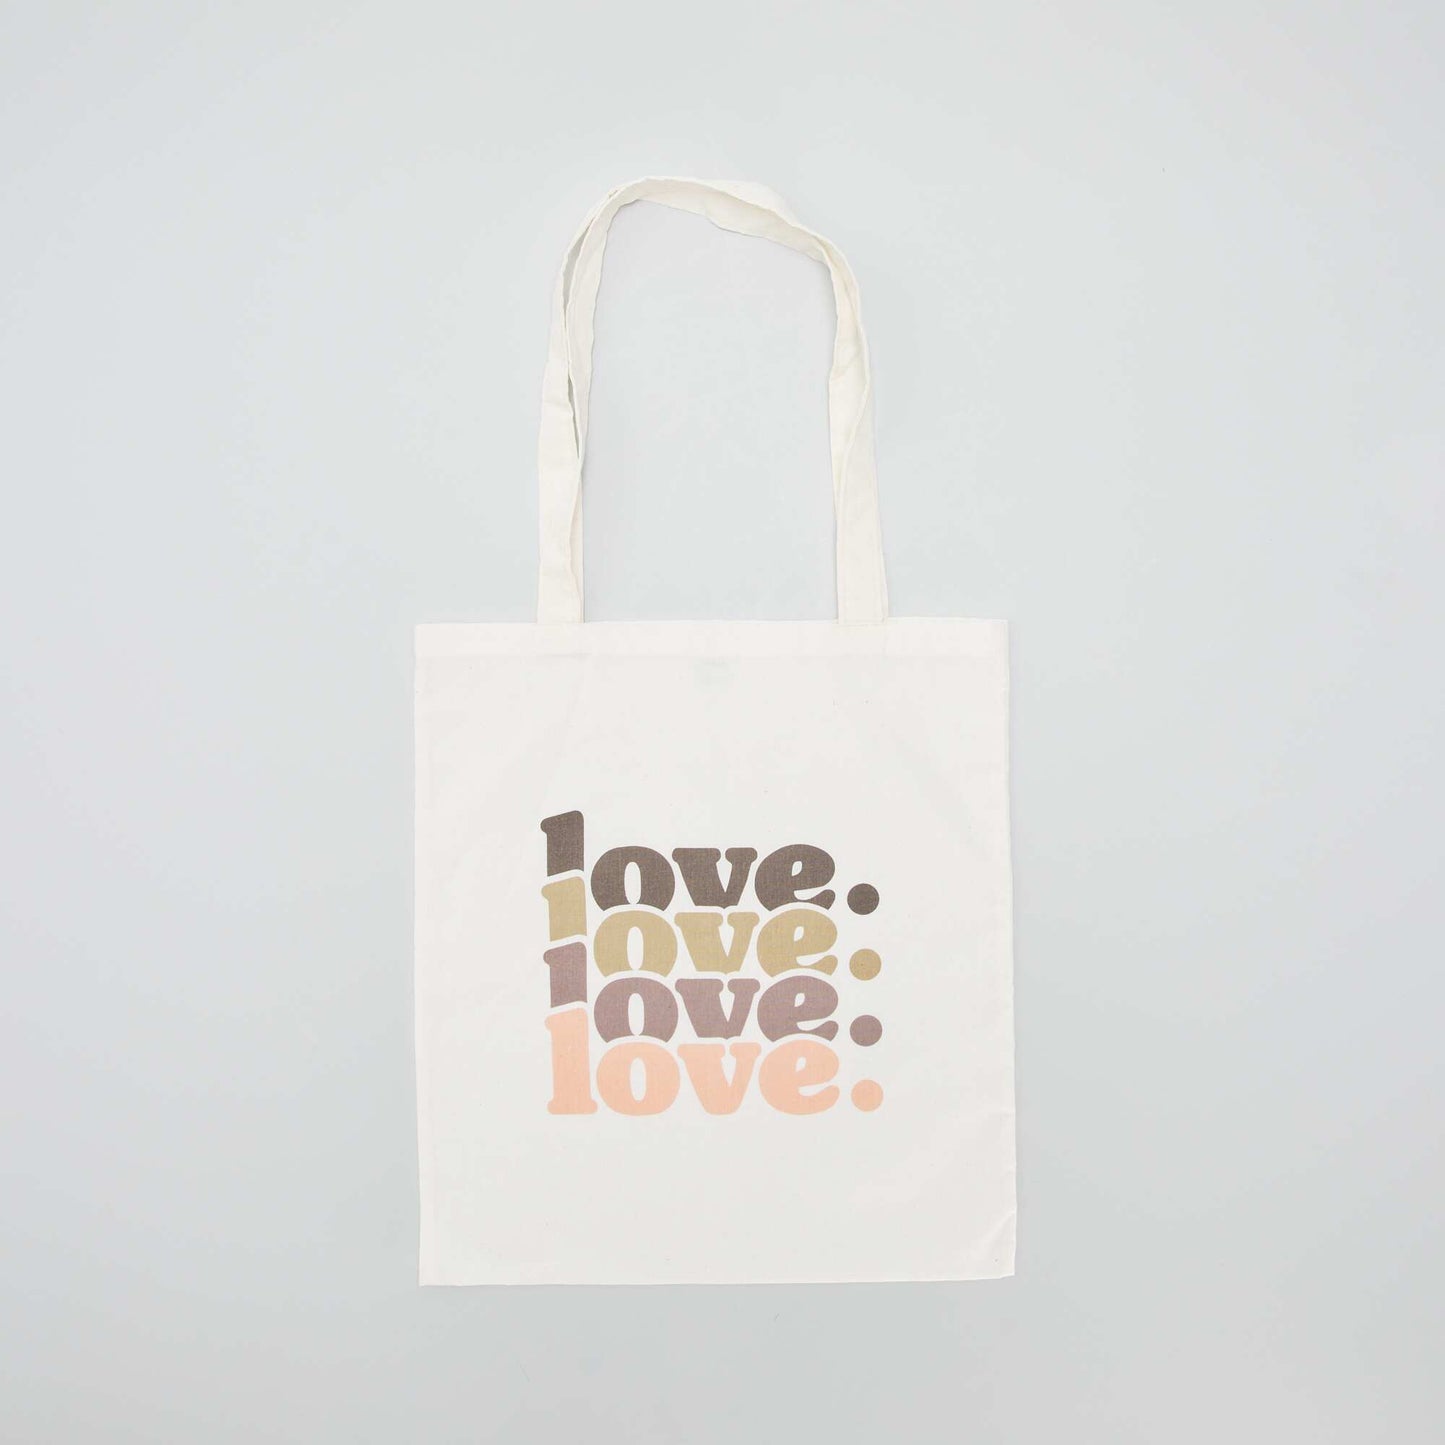 Tote bag inscription 'love' Love